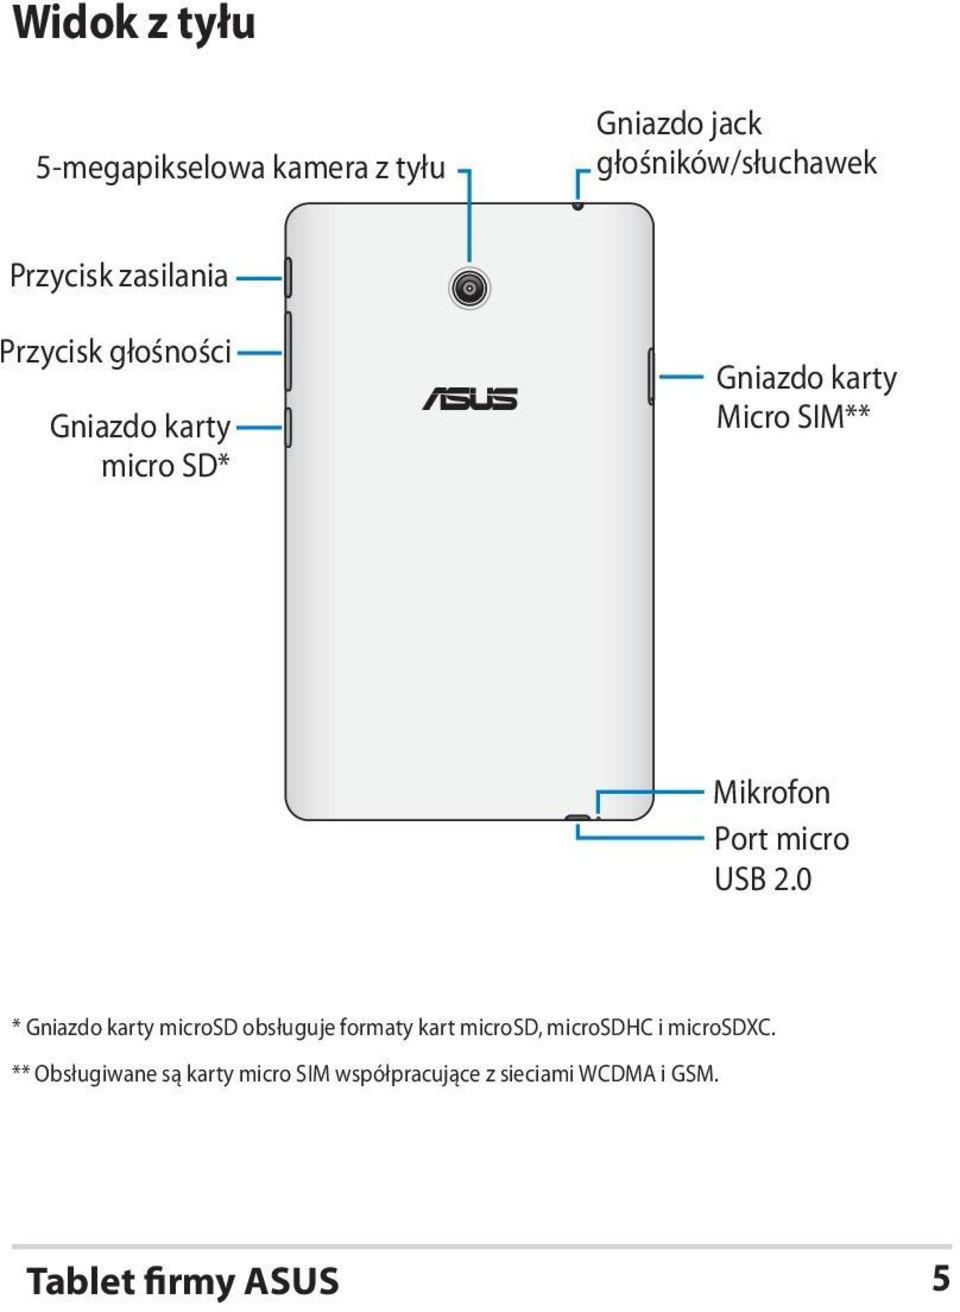 Mikrofon Port micro USB 2.